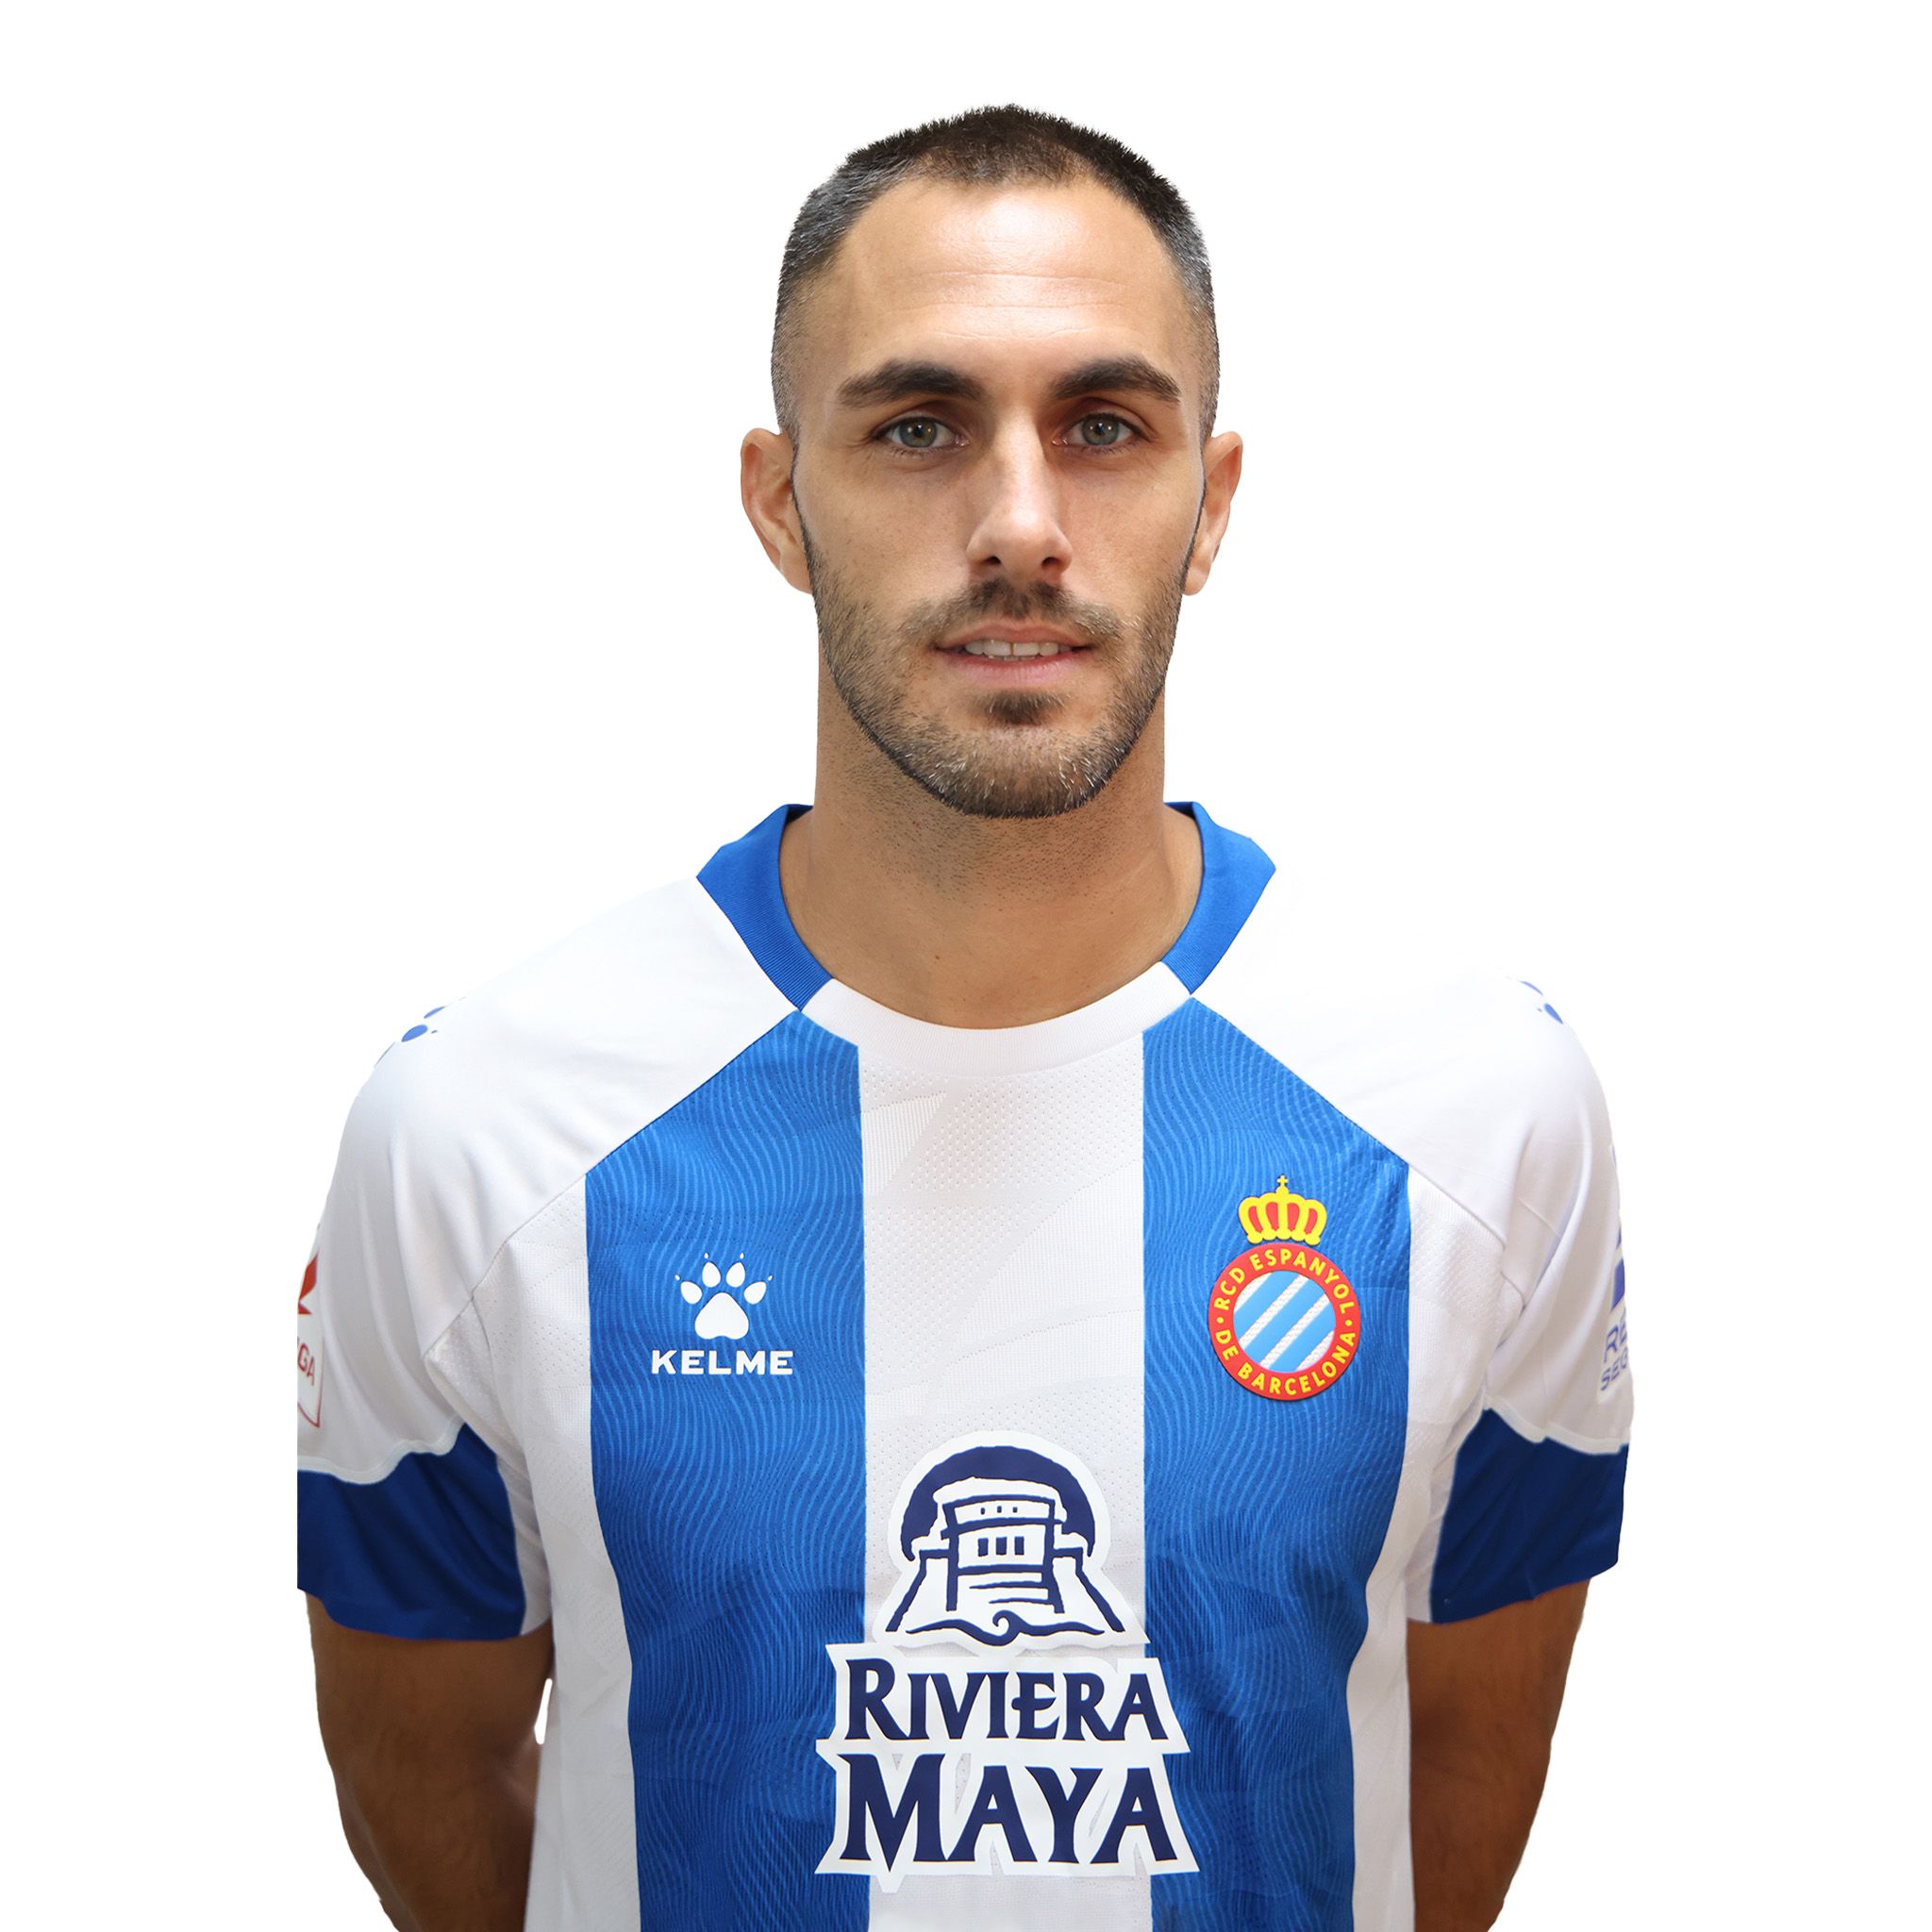 RCD Espanyol - Official Website